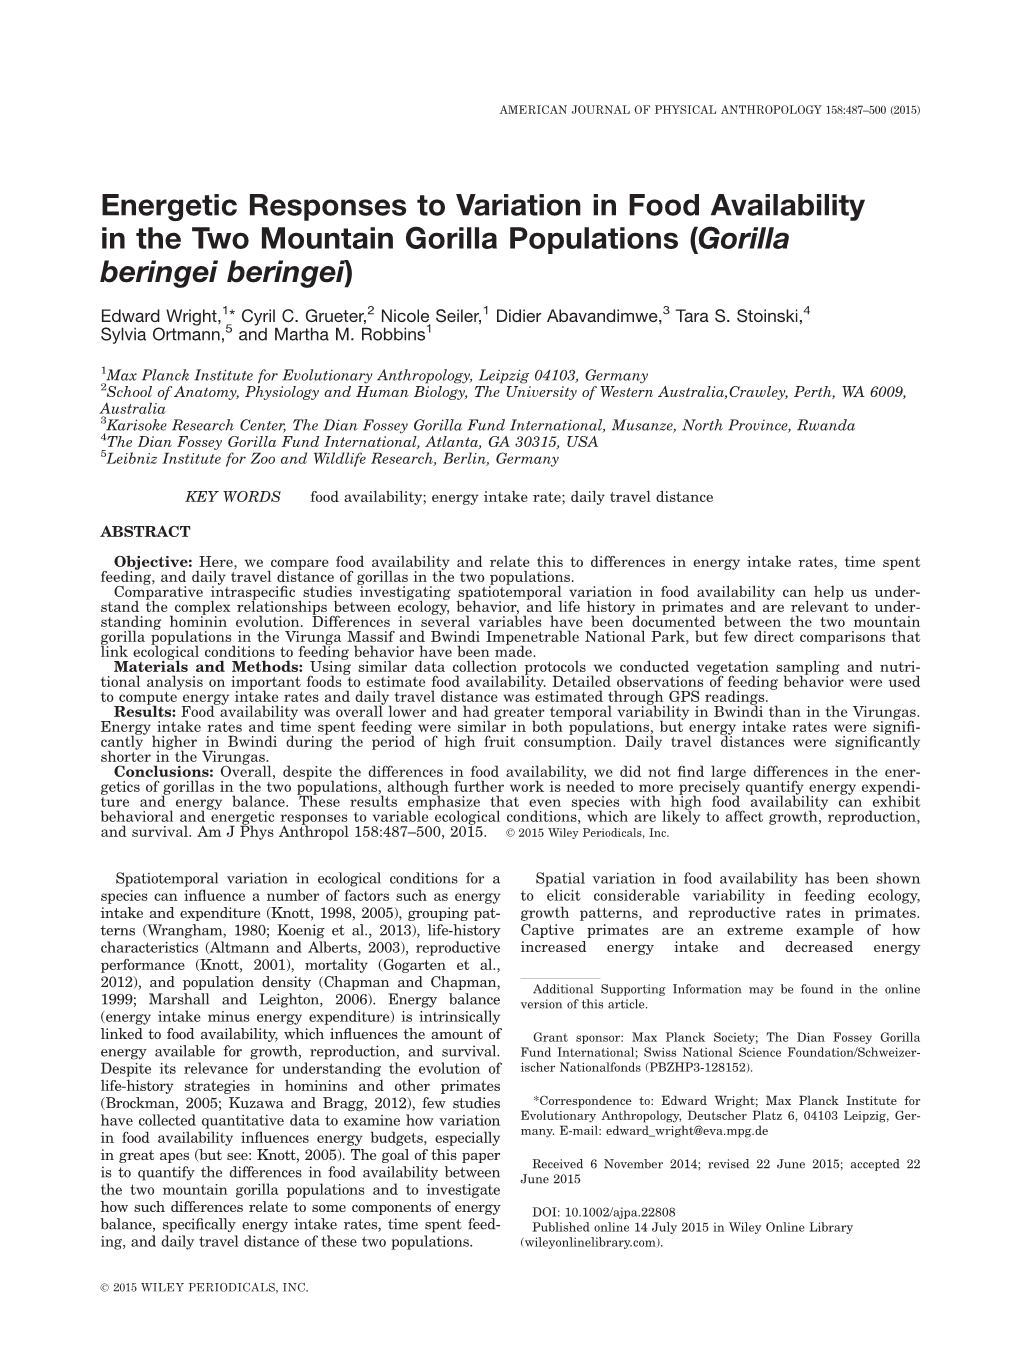 Energetic Responses to Variation in Food Availability in the Two Mountain Gorilla Populations (Gorilla Beringei Beringei)